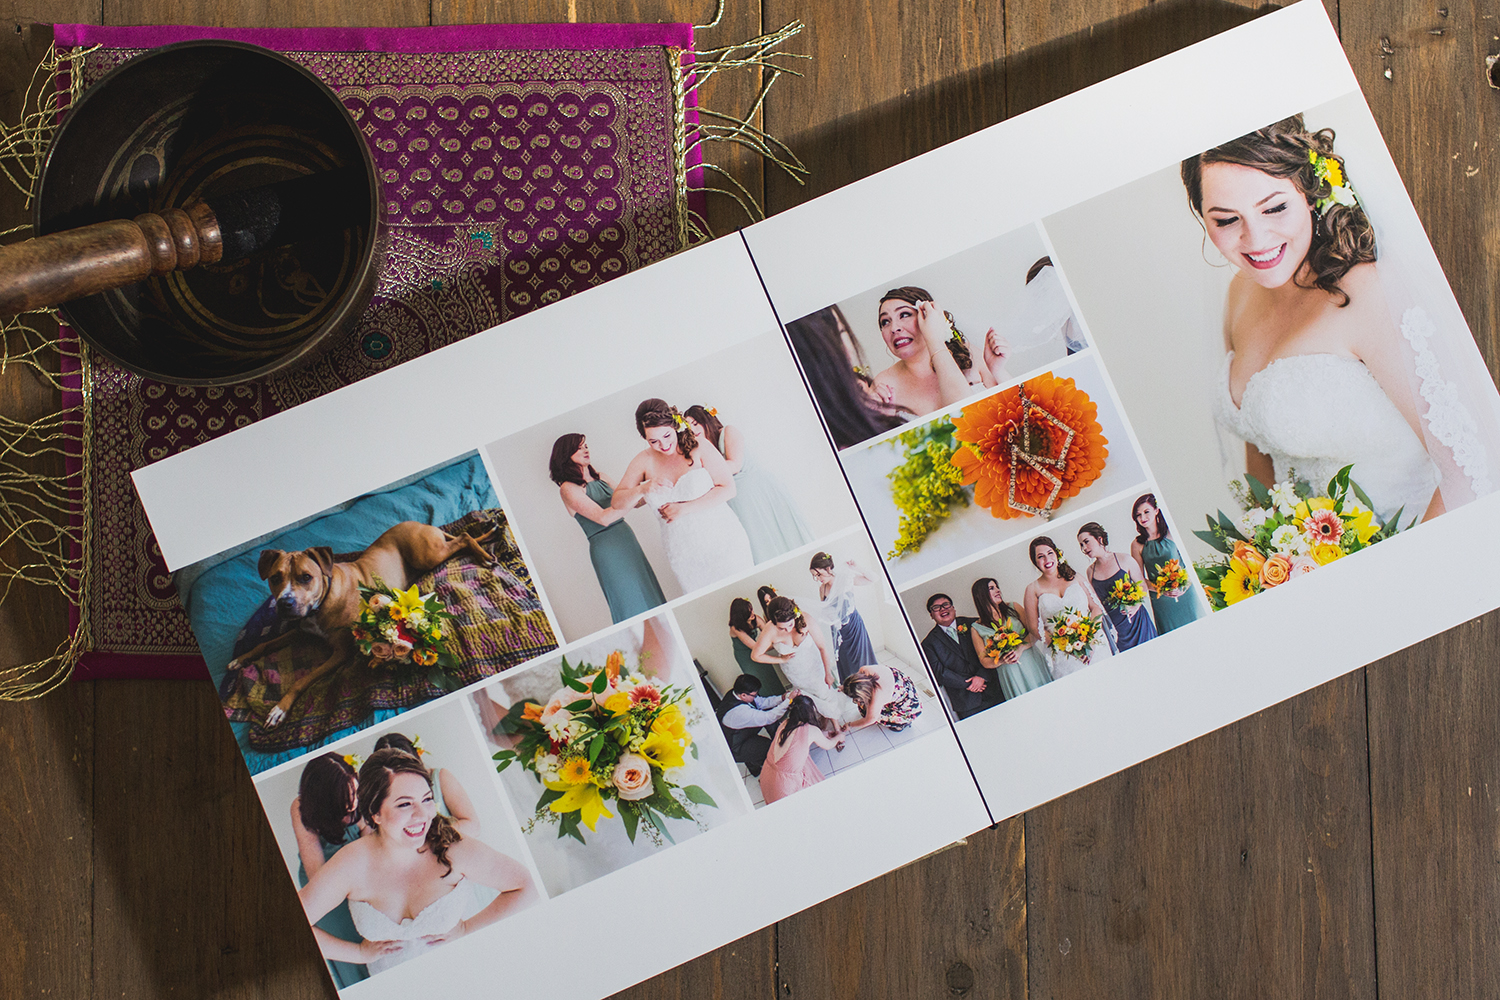 Modern Wedding Album Design Images And Photos Finder